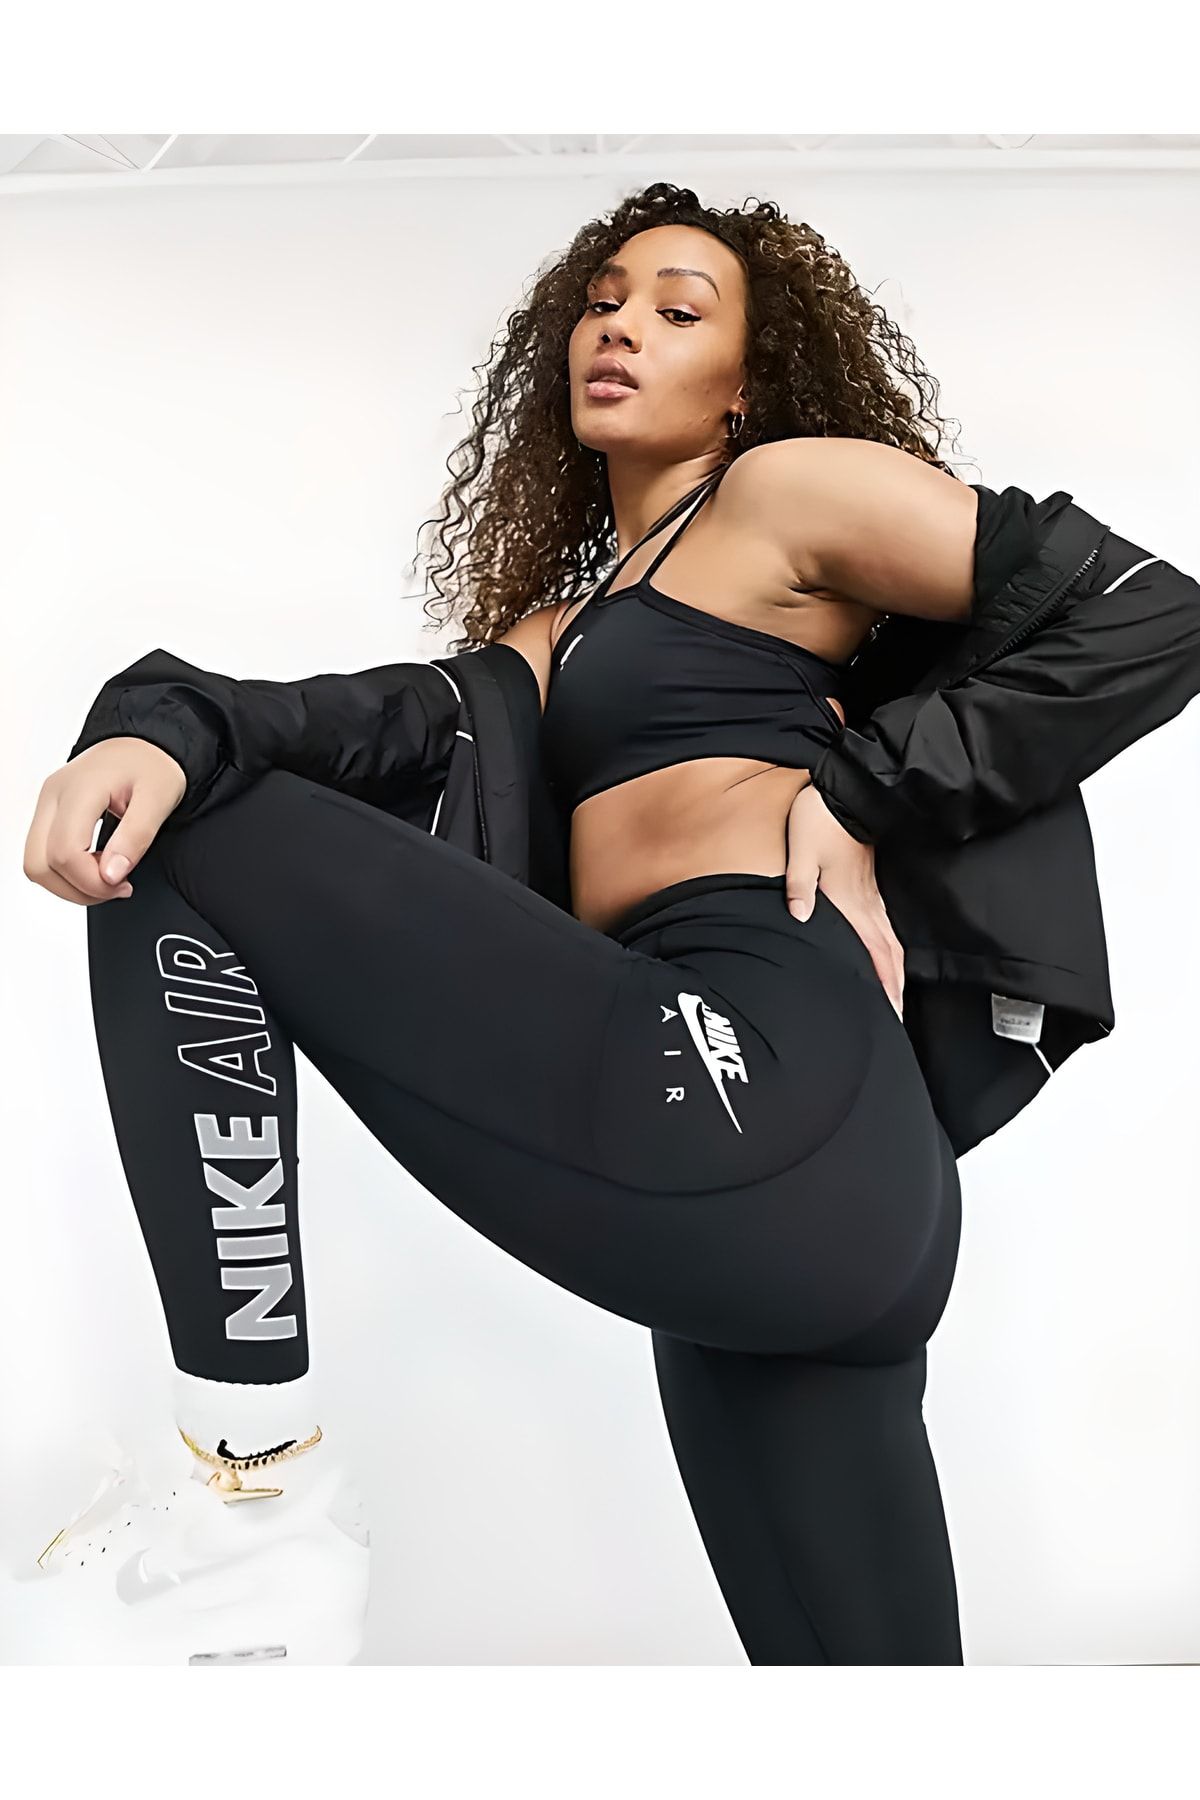 Nike One Kadın Tayt Dd0245-010 Fiyatı, Yorumları - Trendyol